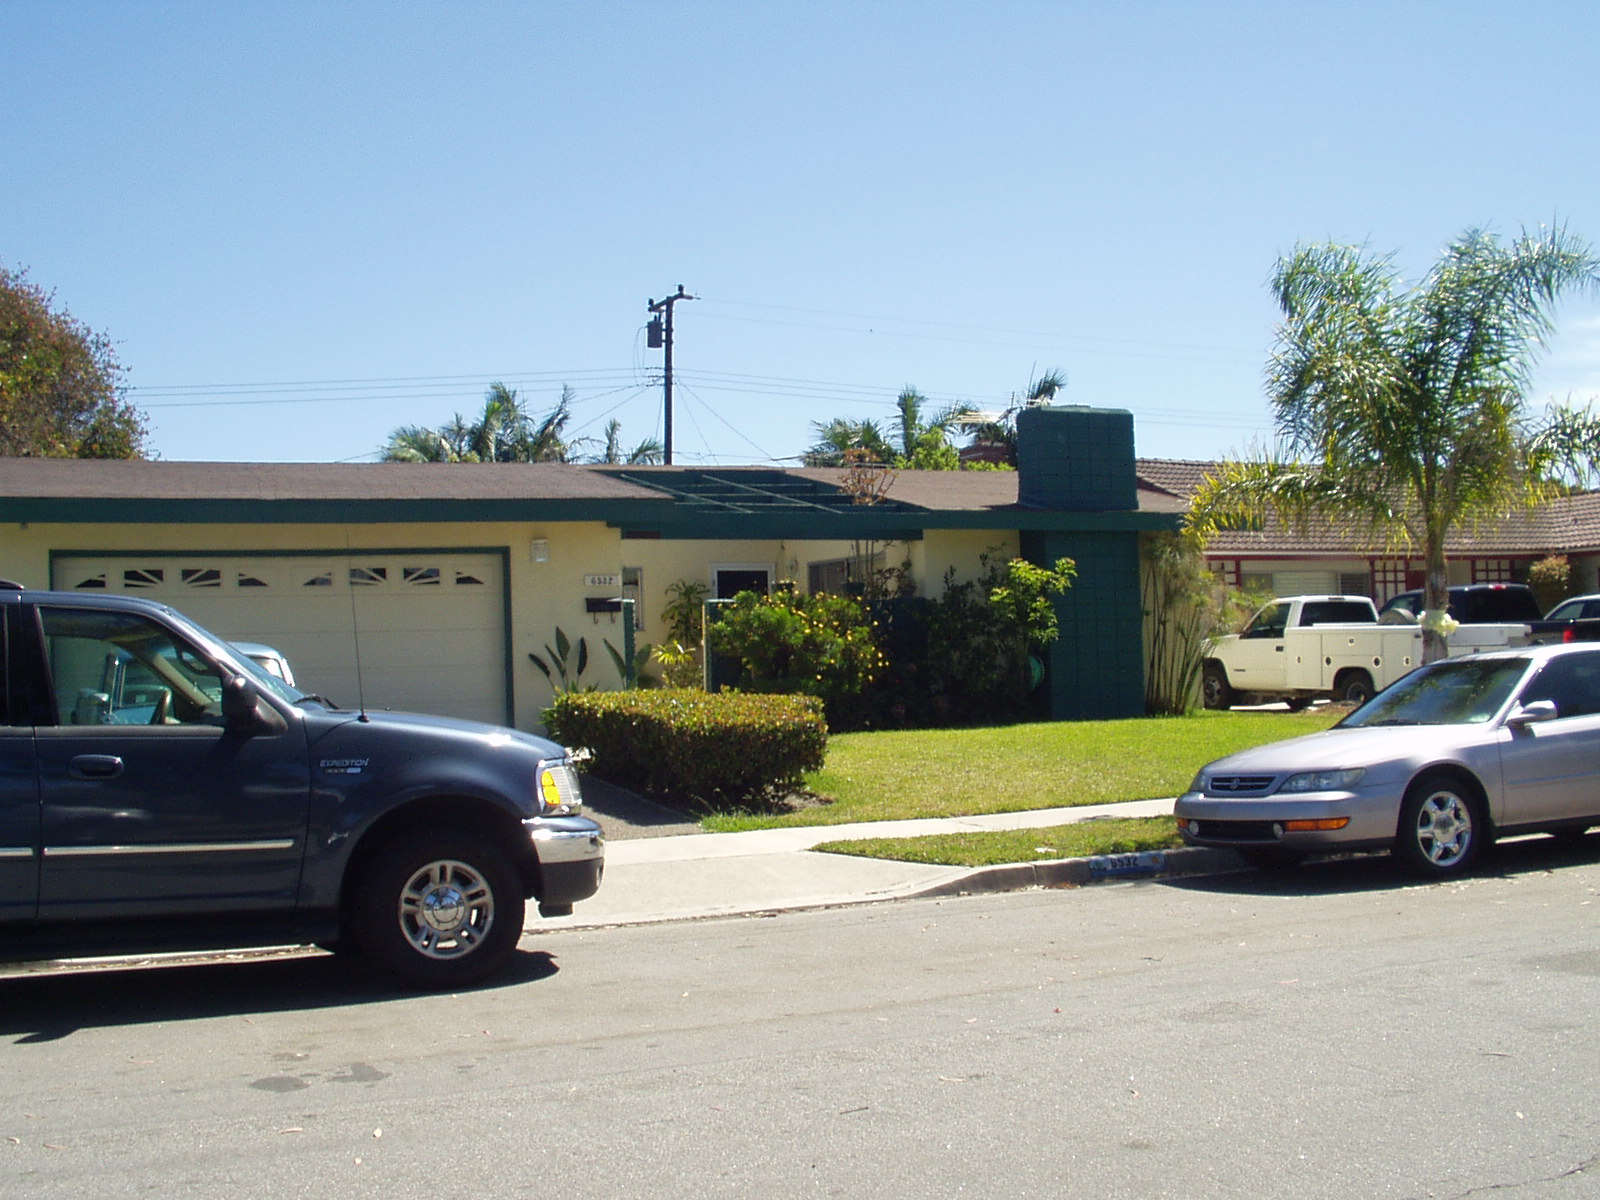 Bryant's Huntington Beach home when she attended Marina High School